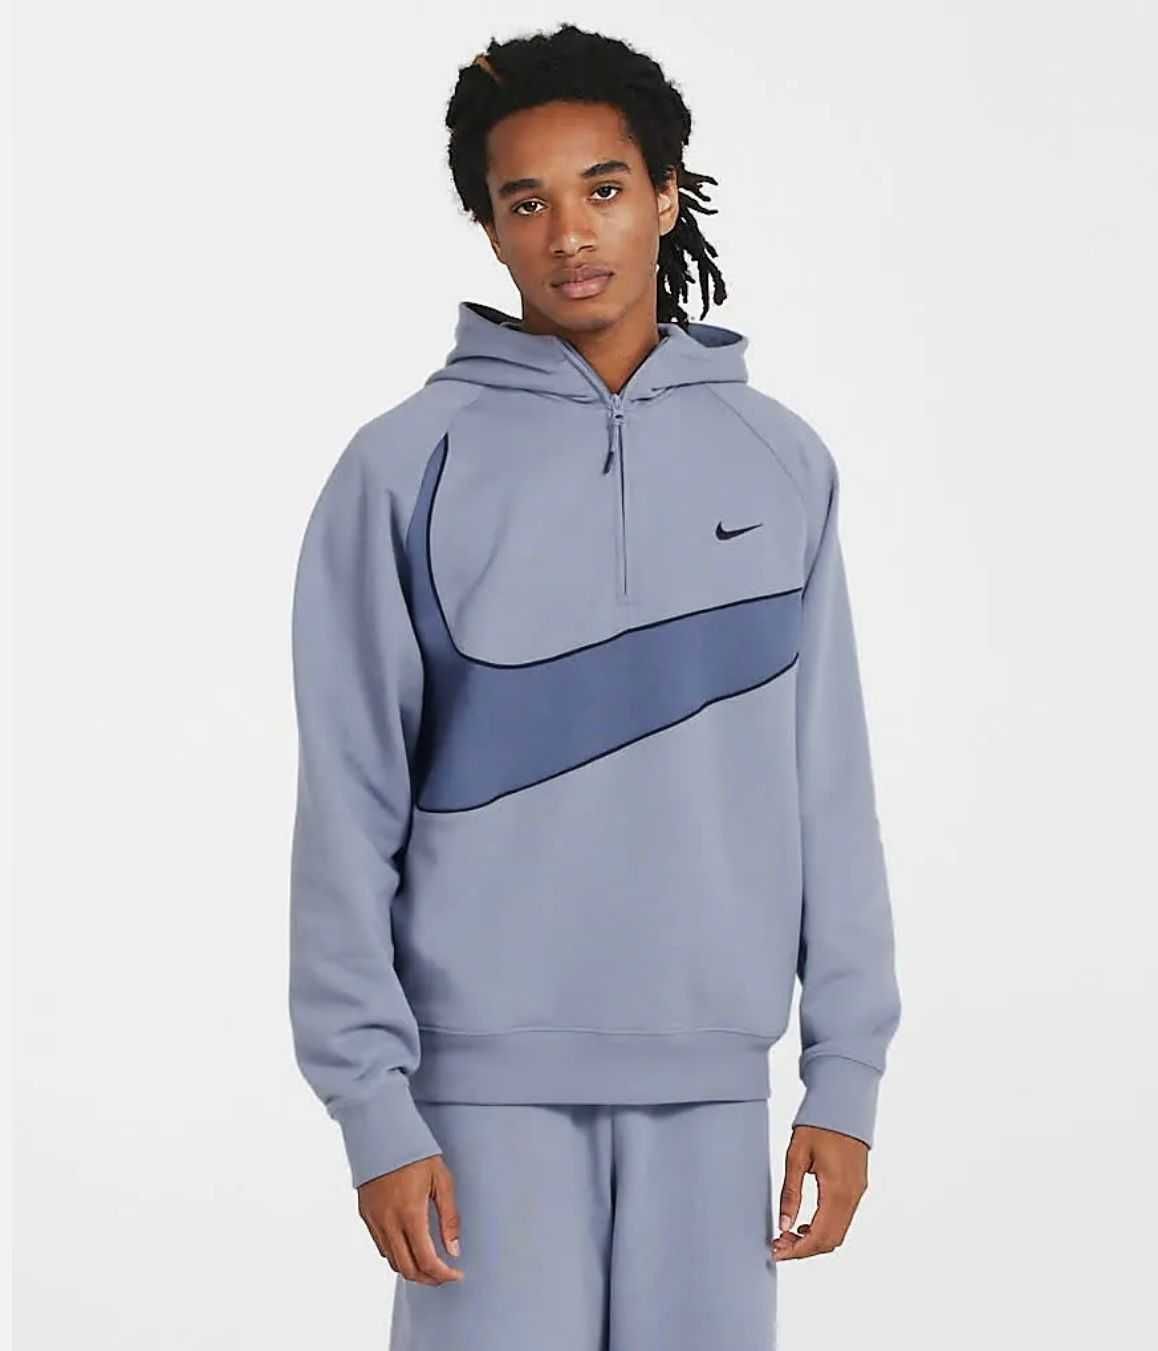 Hanorac Nike de barbati nou cu eticheta